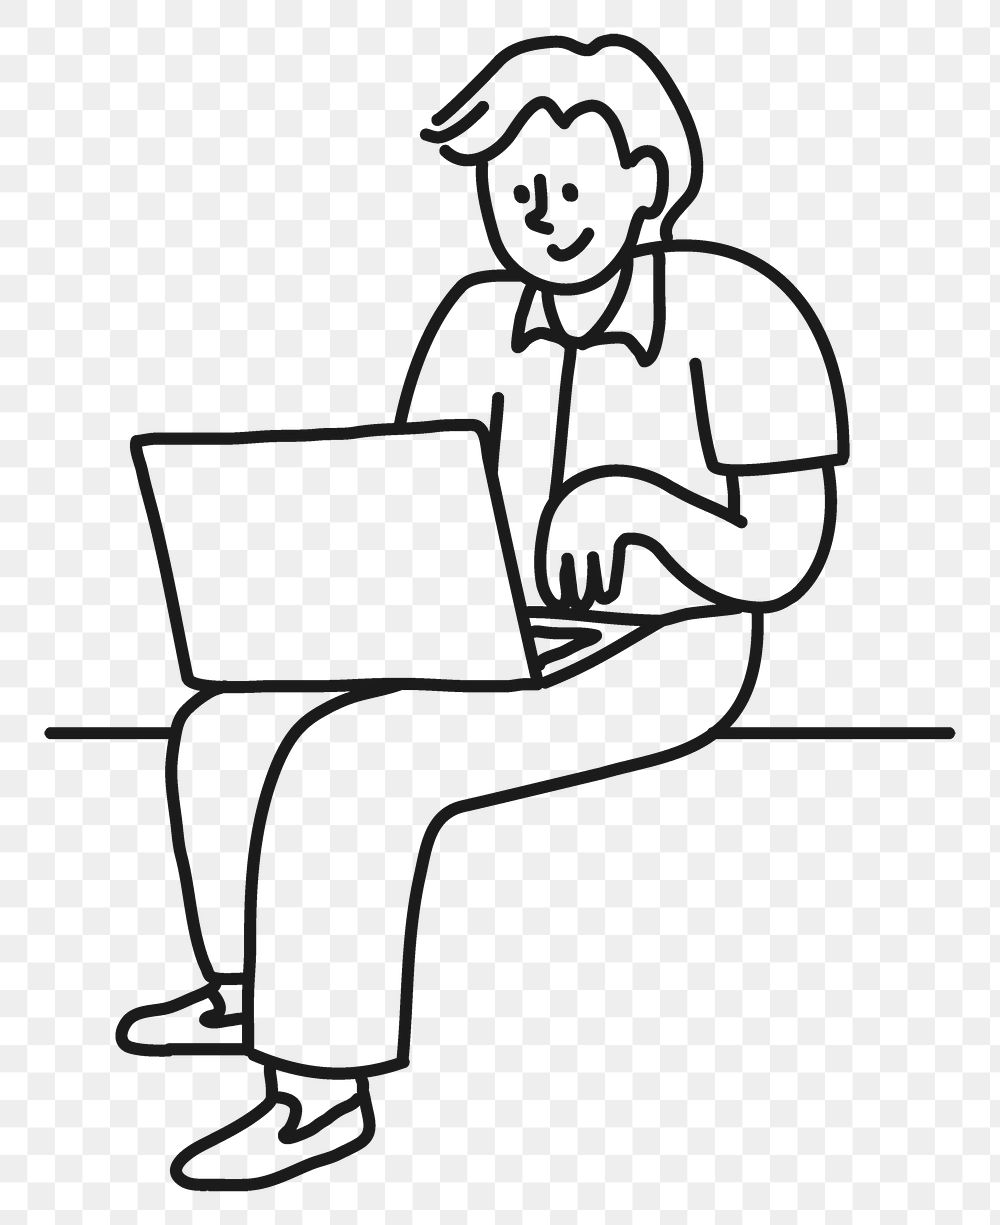 Png man working on laptop sticker, job doodle character line art on transparent background